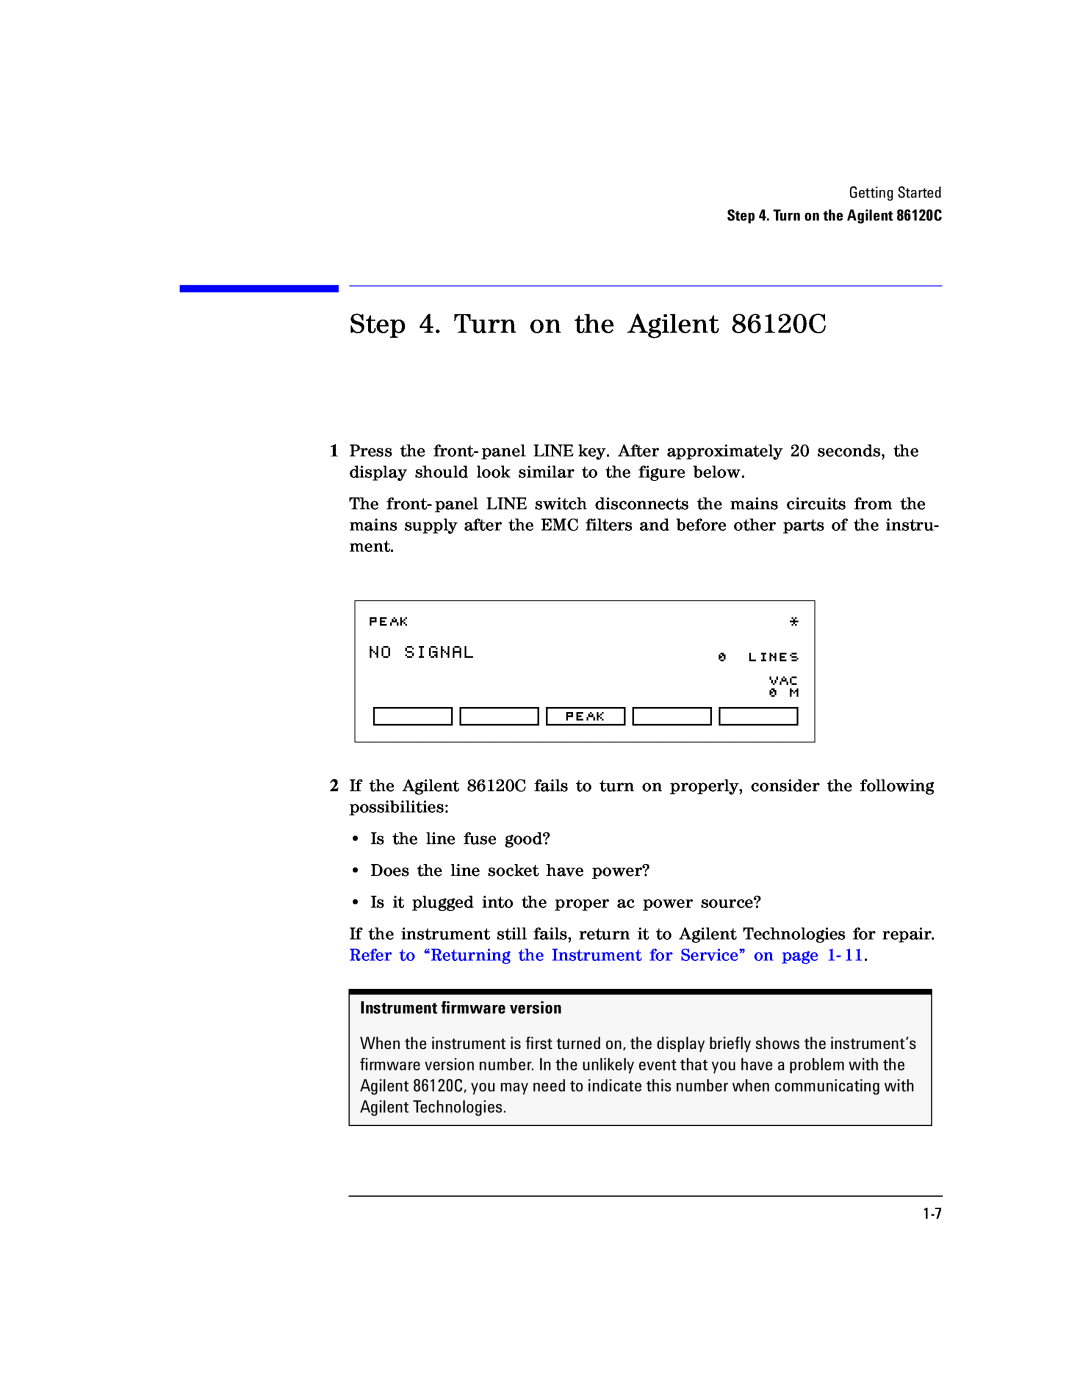 Agilent Technologies manual Turn on the Agilent 86120C, Instrument firmware version 